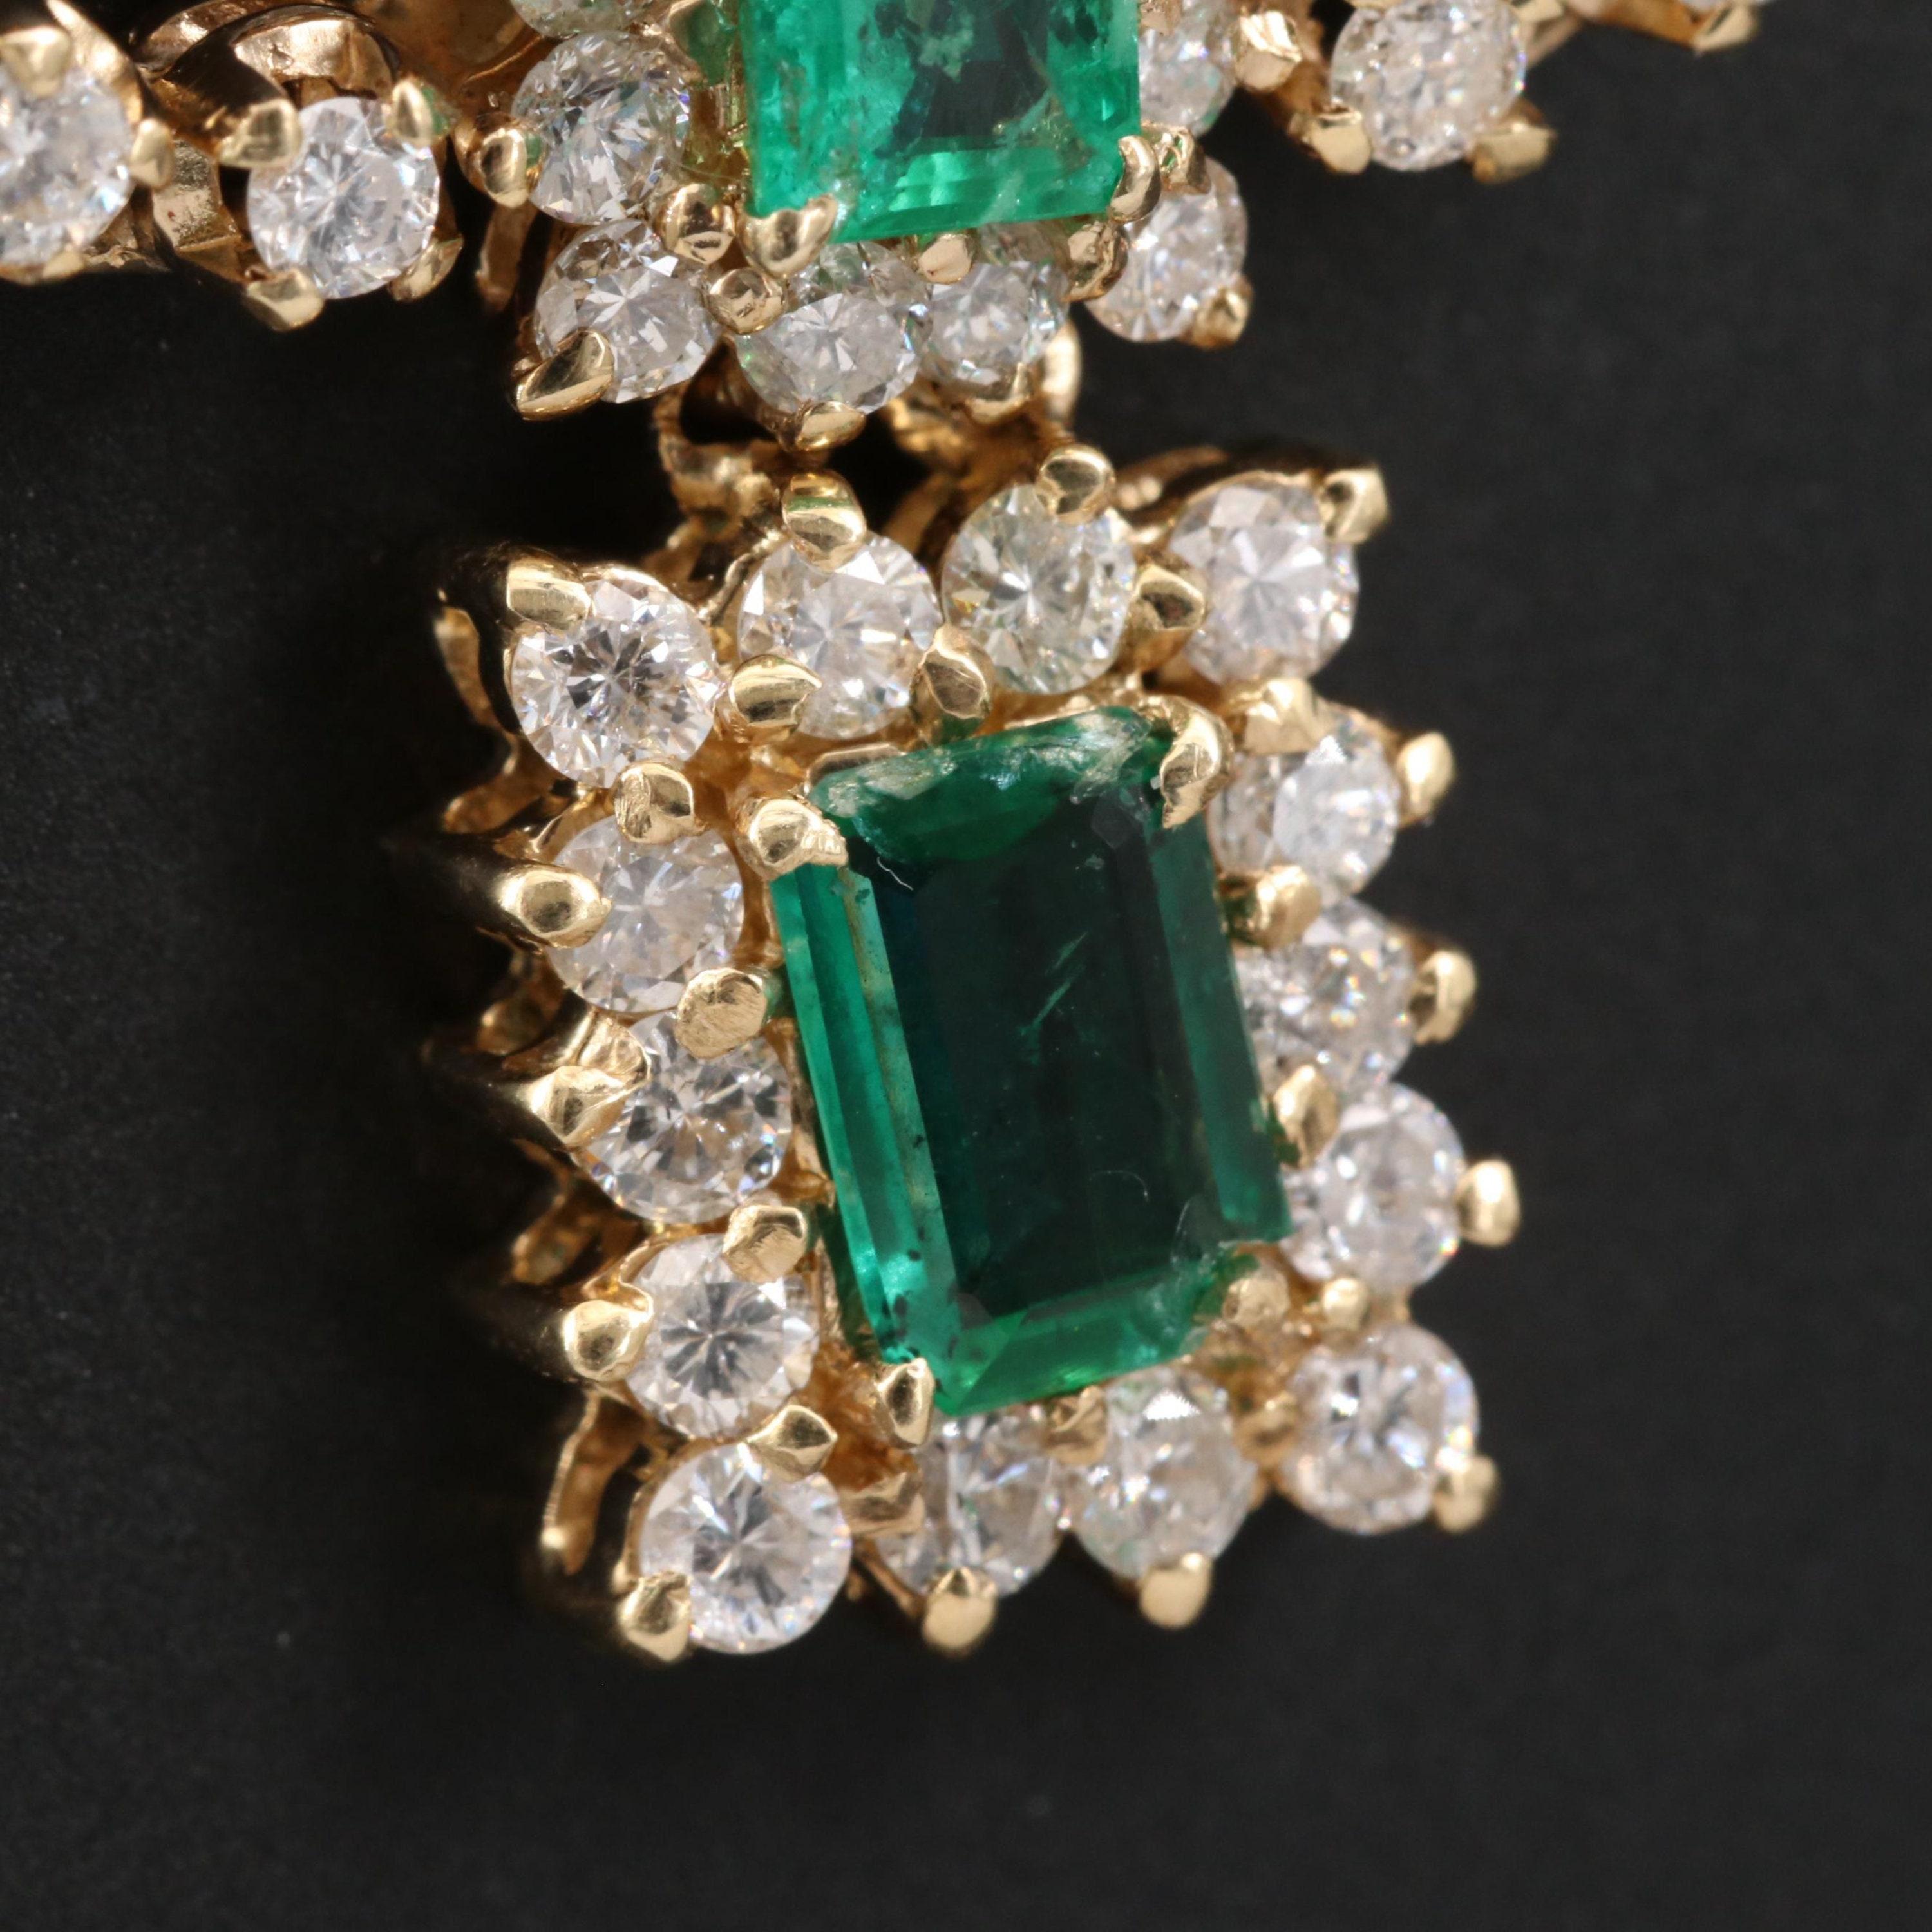 Vintage Emerald Cut Emerald Diamonds Pendant Necklace, 18K Gold In New Condition For Sale In Orlando, Florida